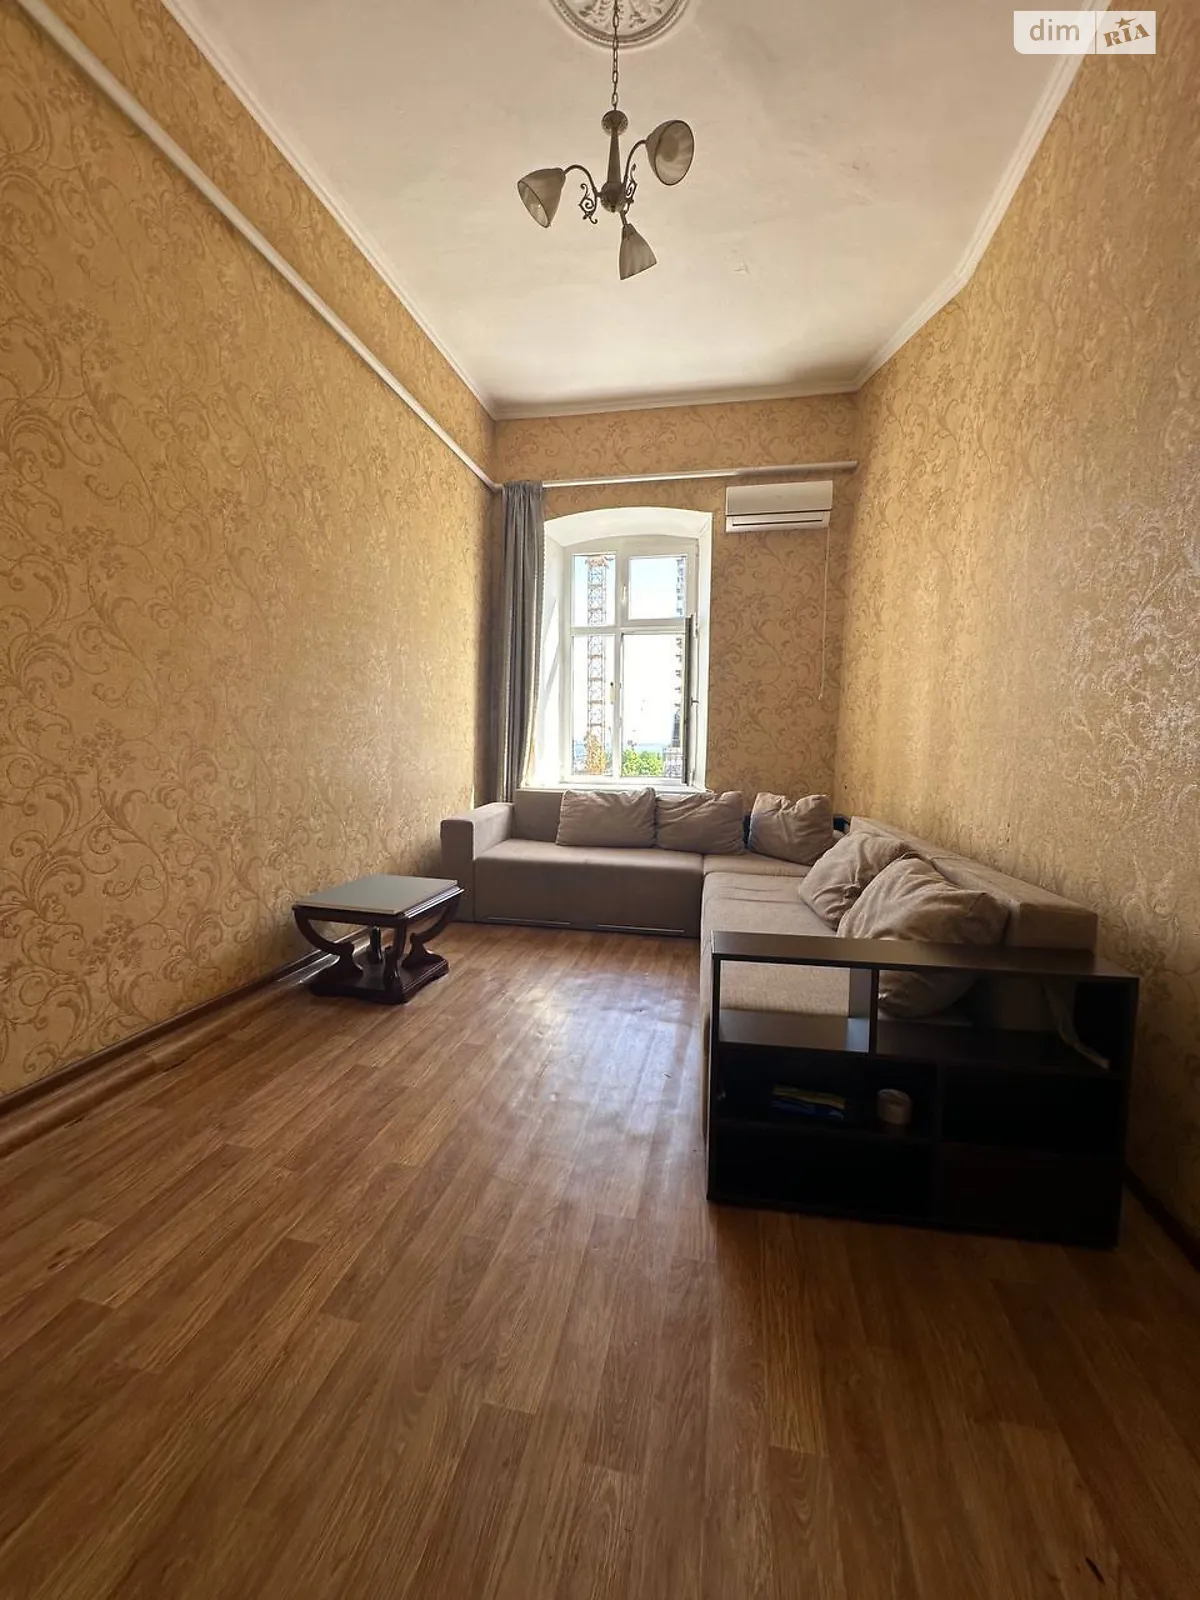 Продается комната 245 кв. м в Одессе, цена: 10500 $ - фото 1